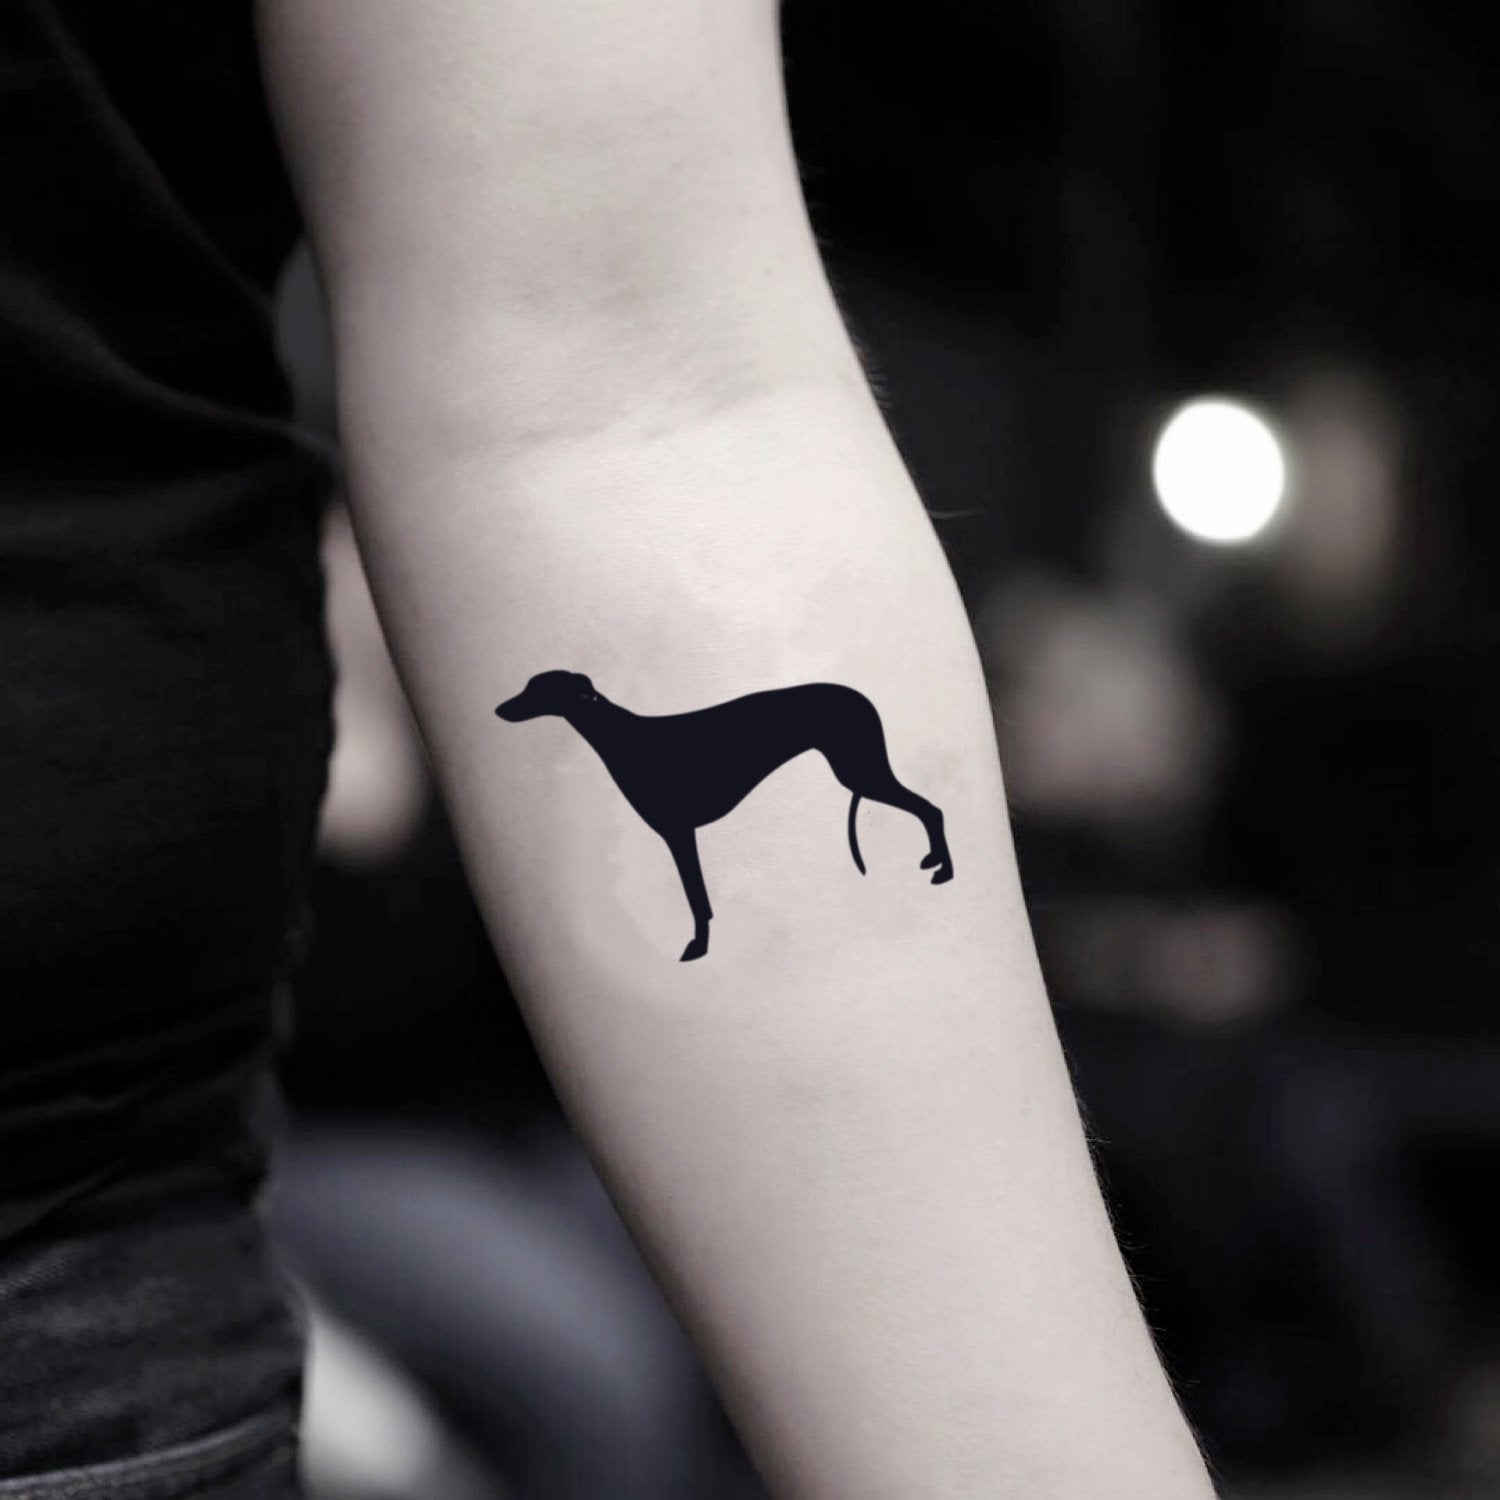 fake small greyhound animal temporary tattoo sticker design idea on inner arm